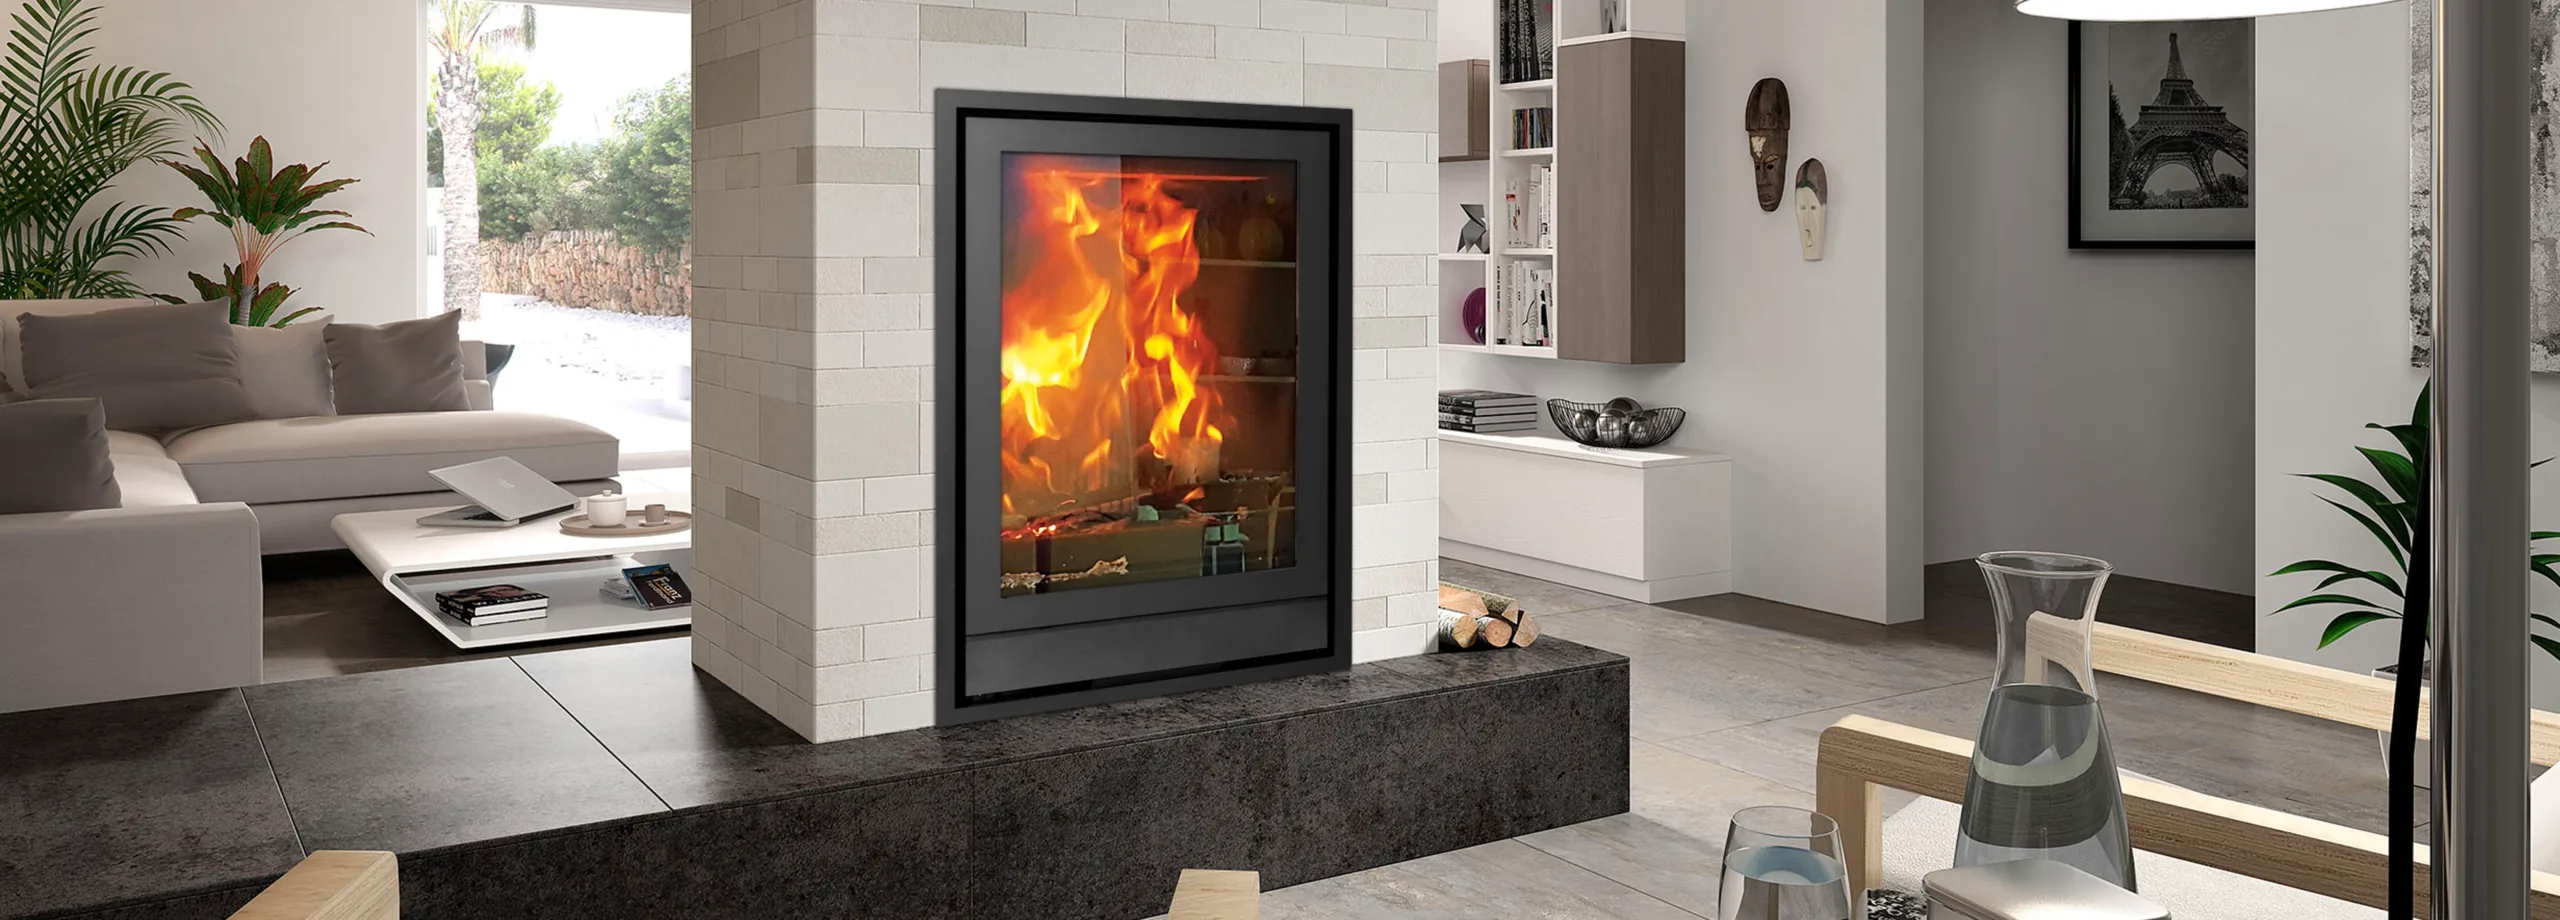 Nestor Martin IQH33 wood fireplace insert